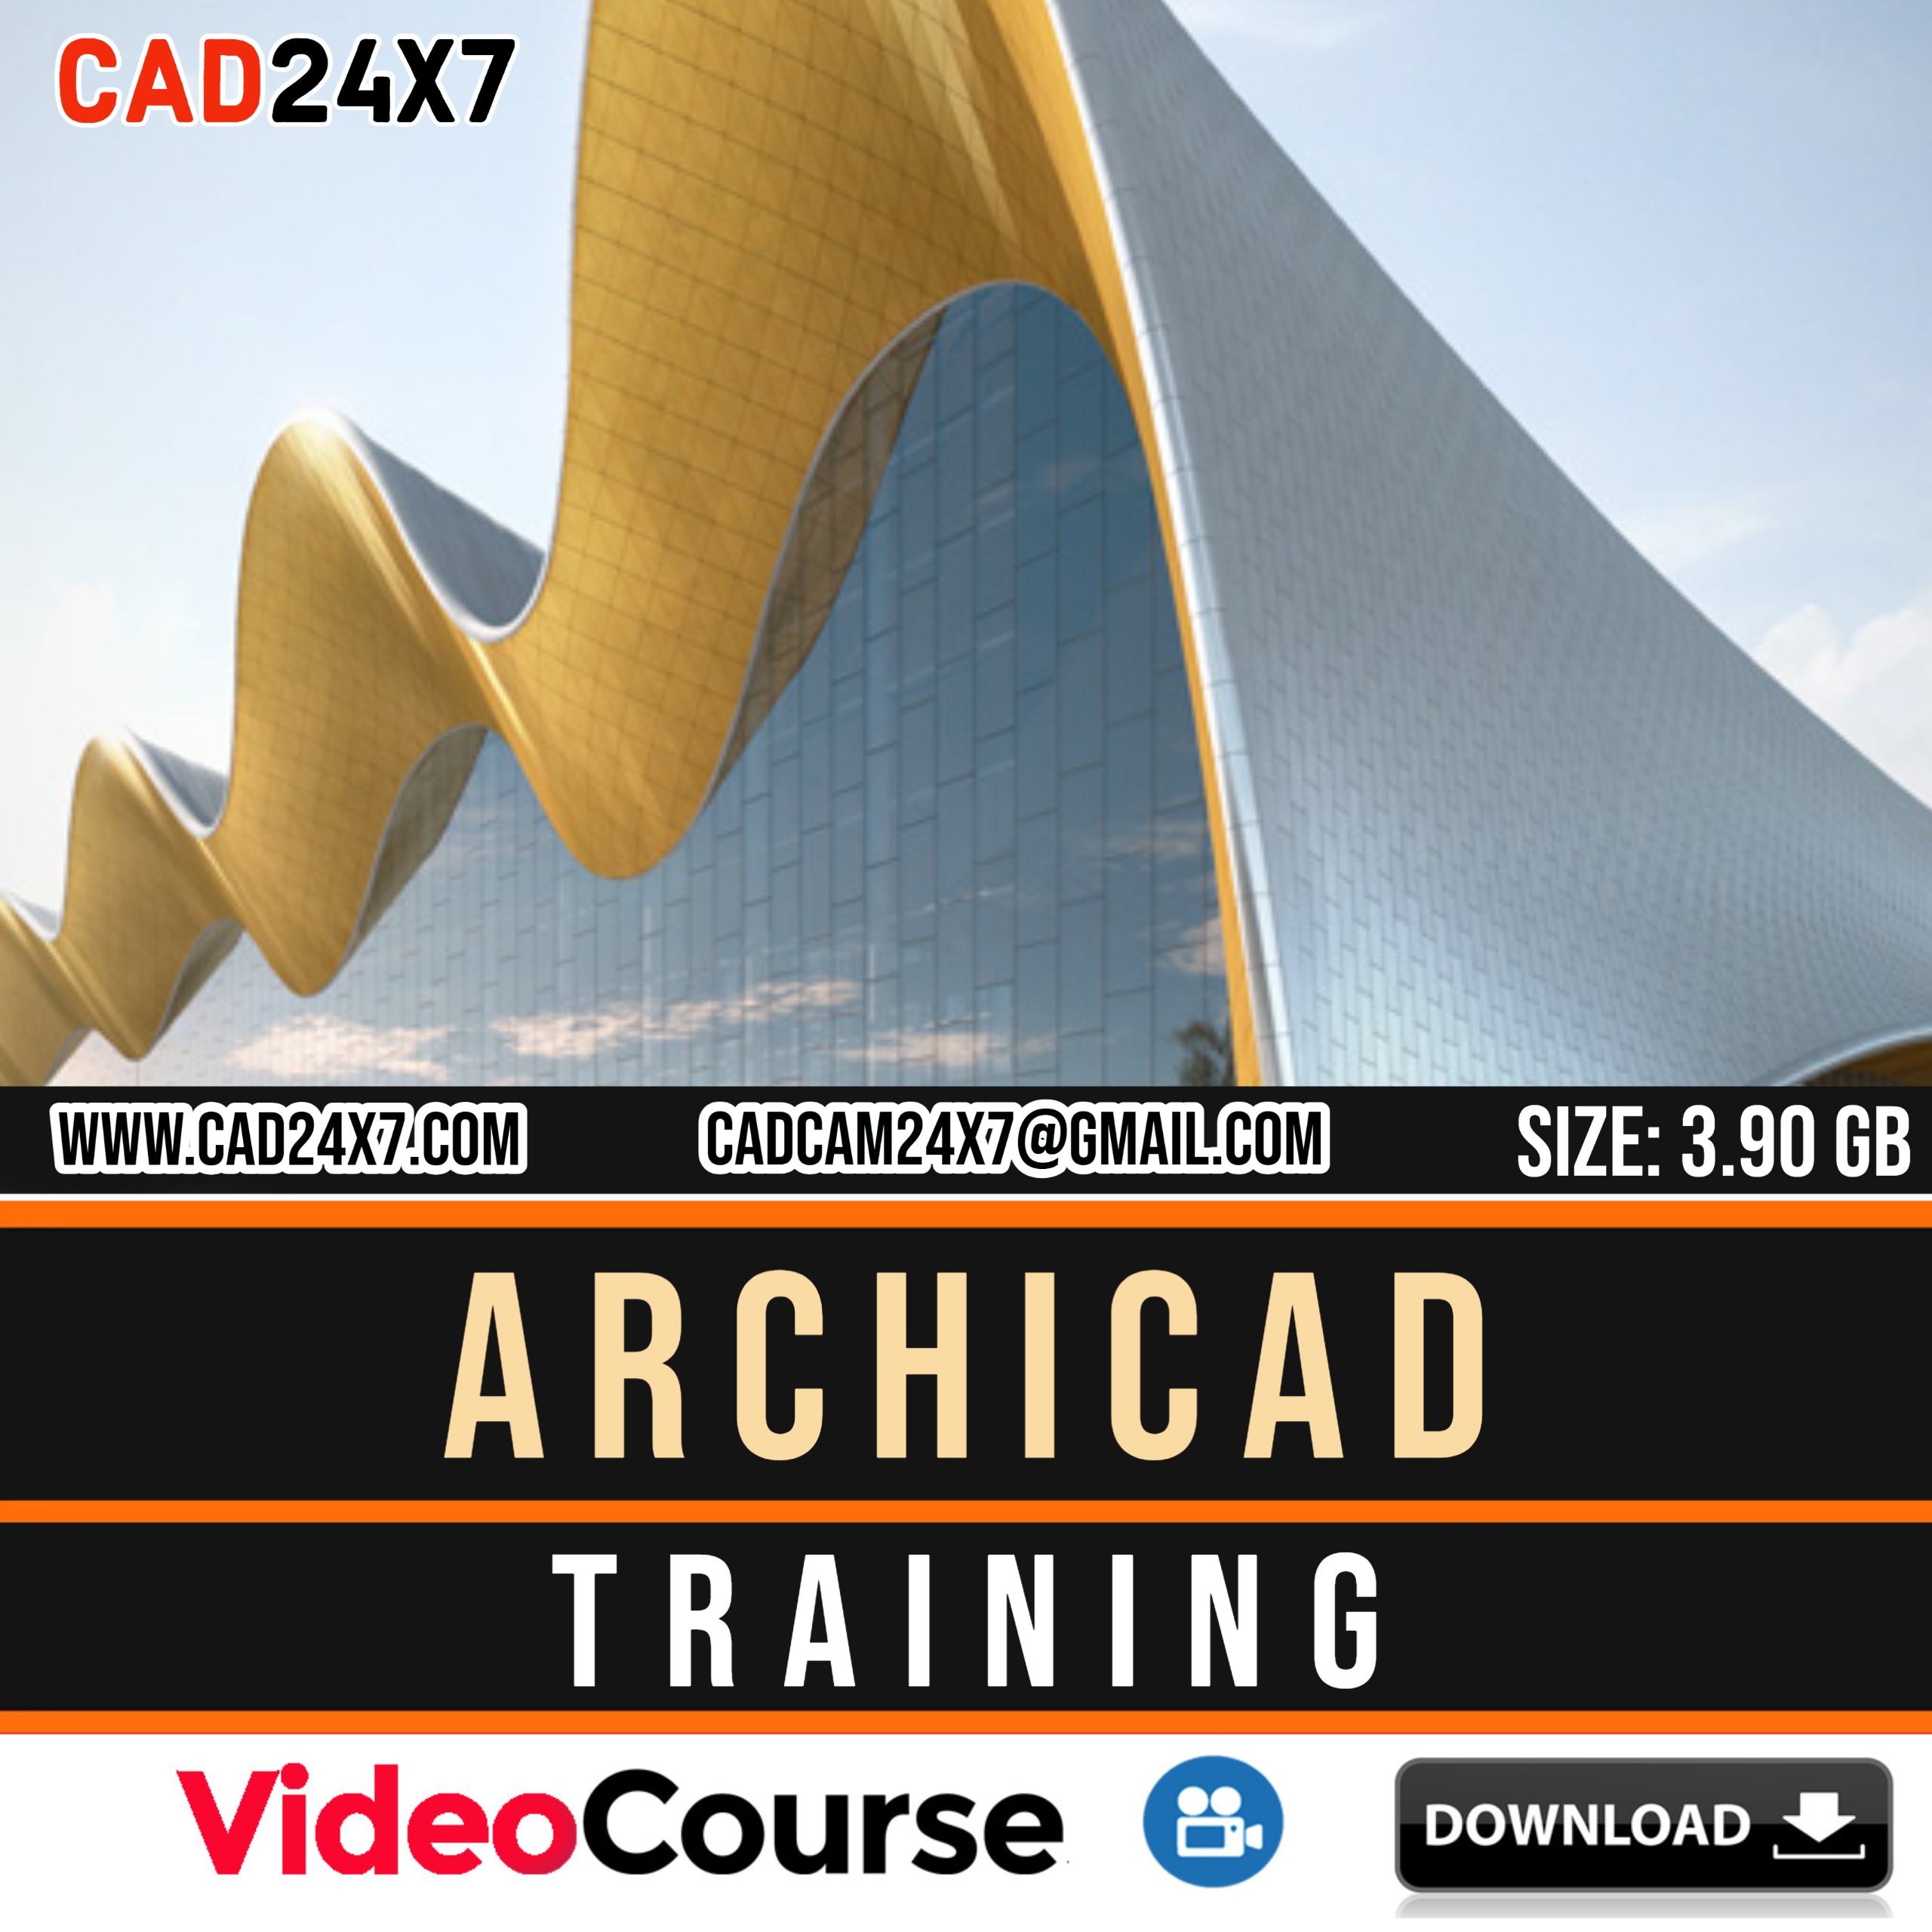 ArchiCAD Training